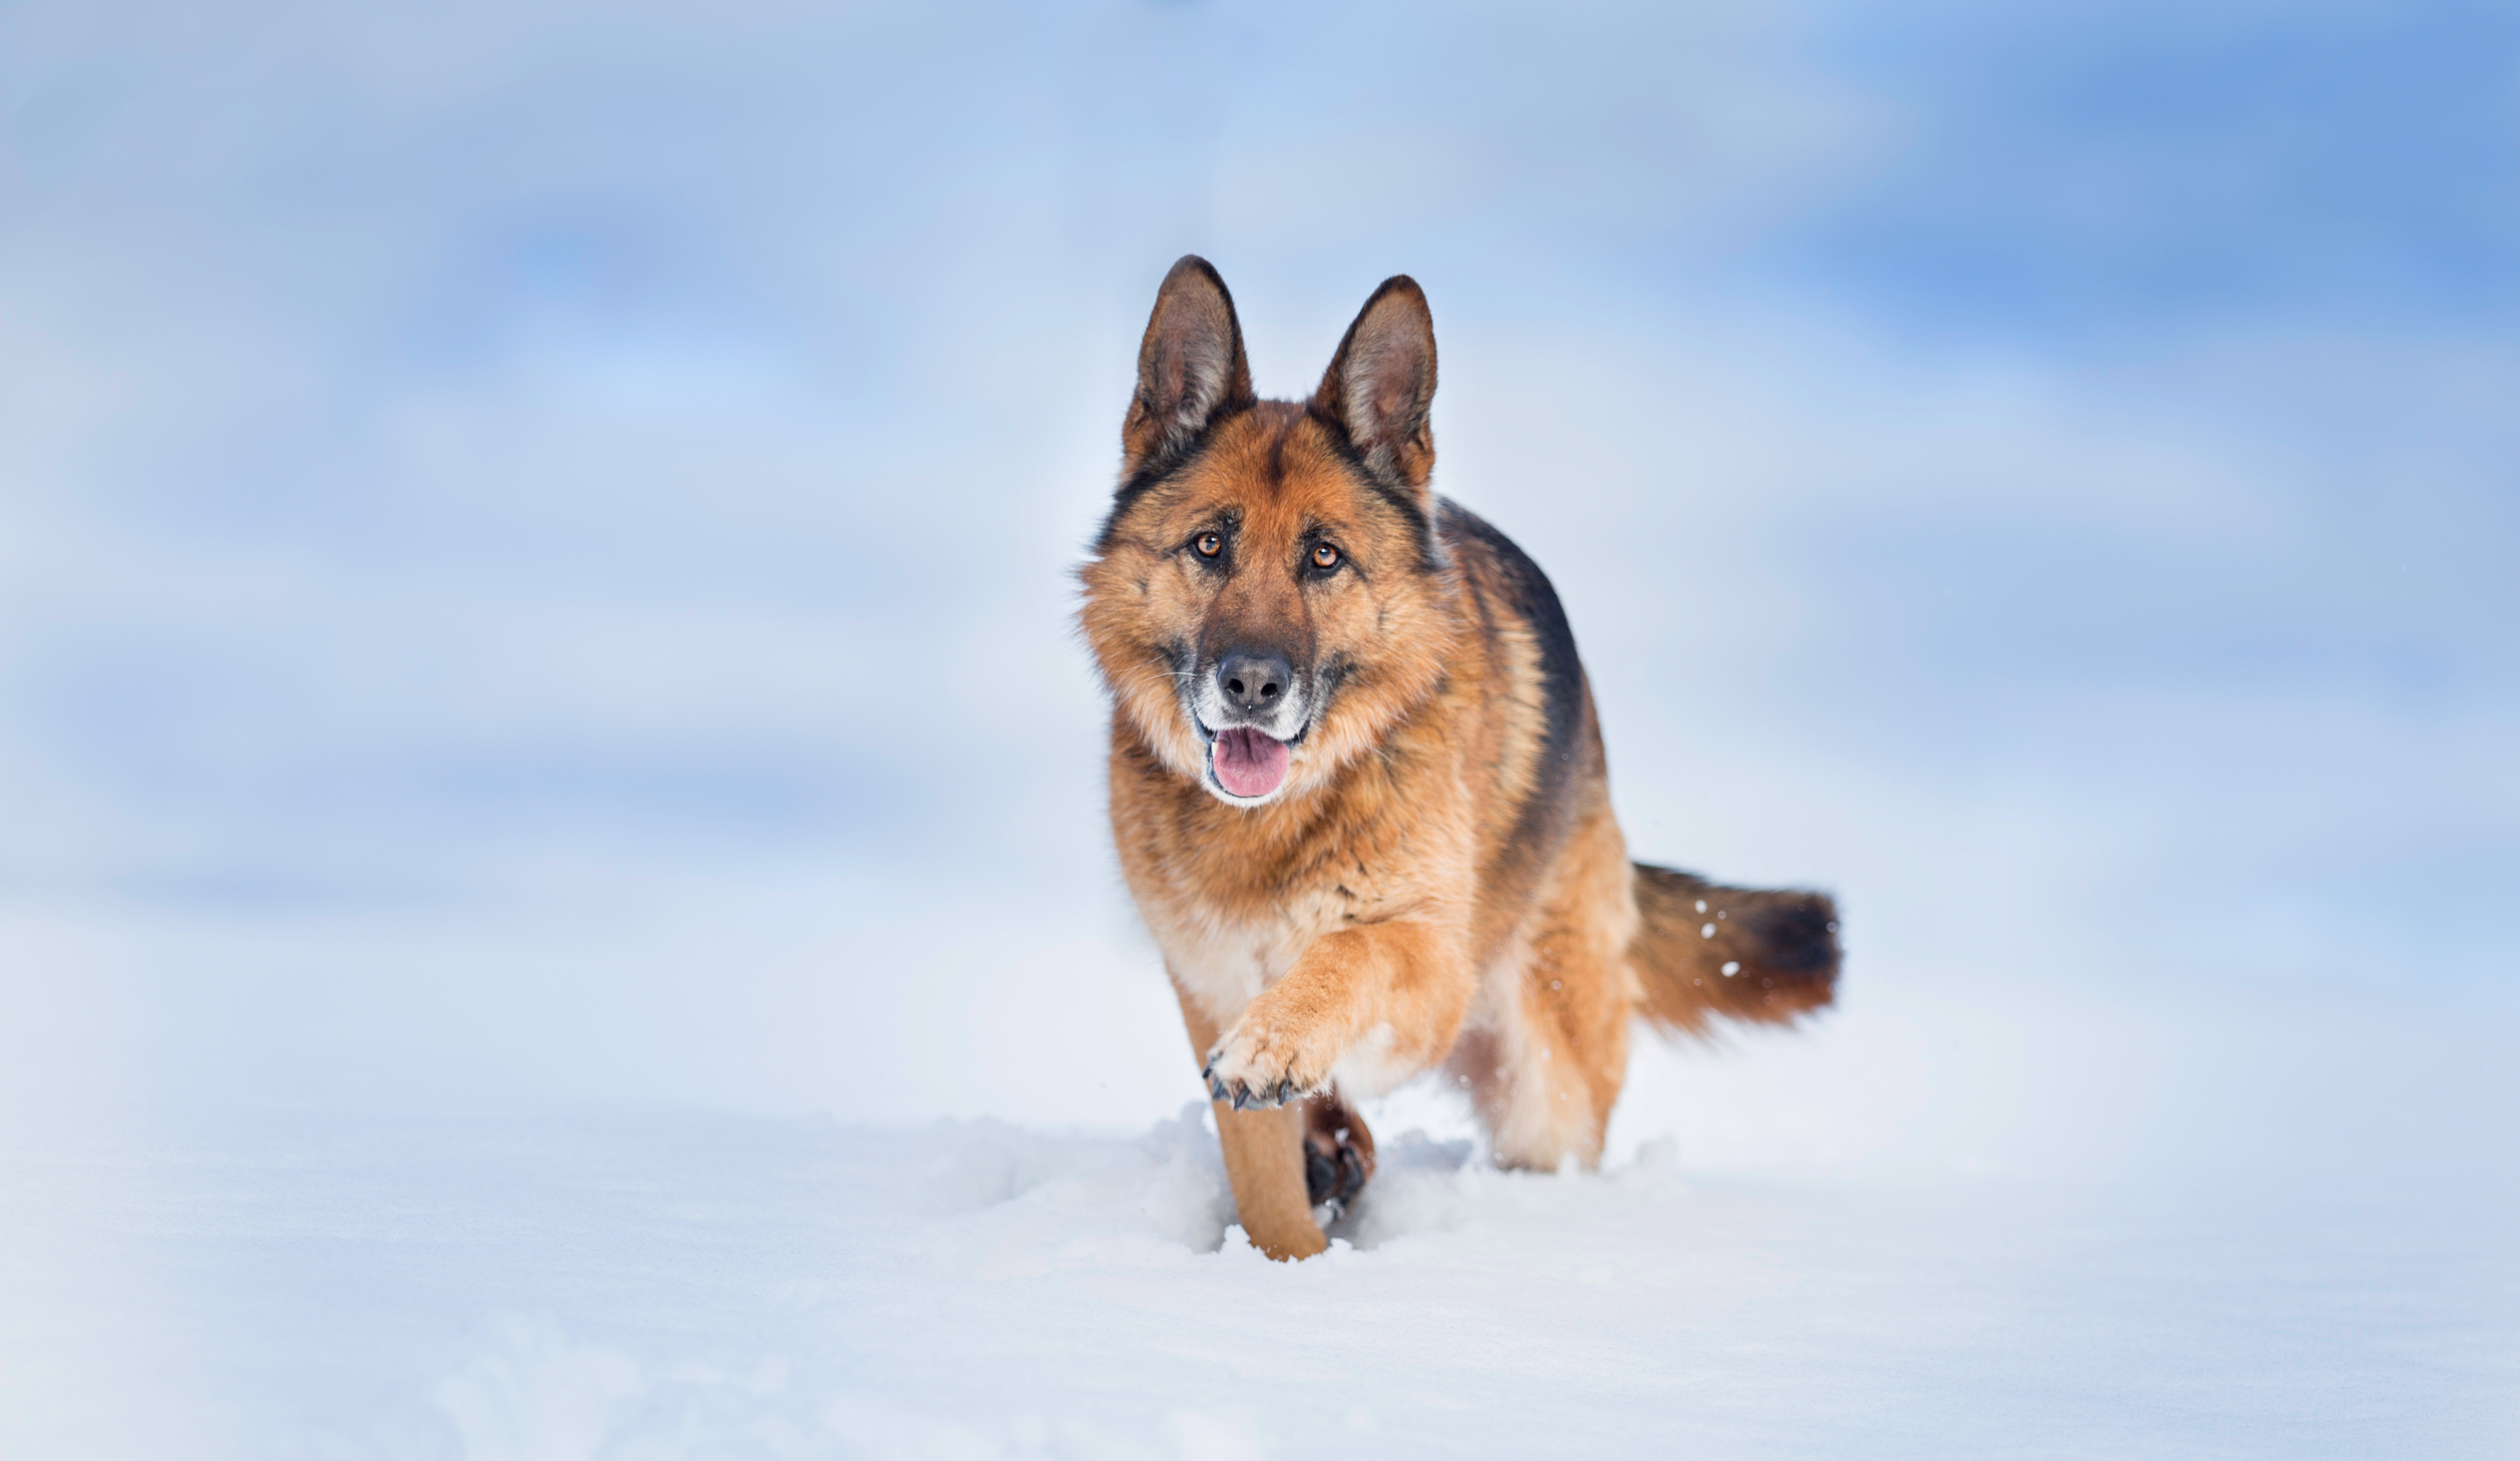 Dog Pet Snow Depth Of Field 5093x2952